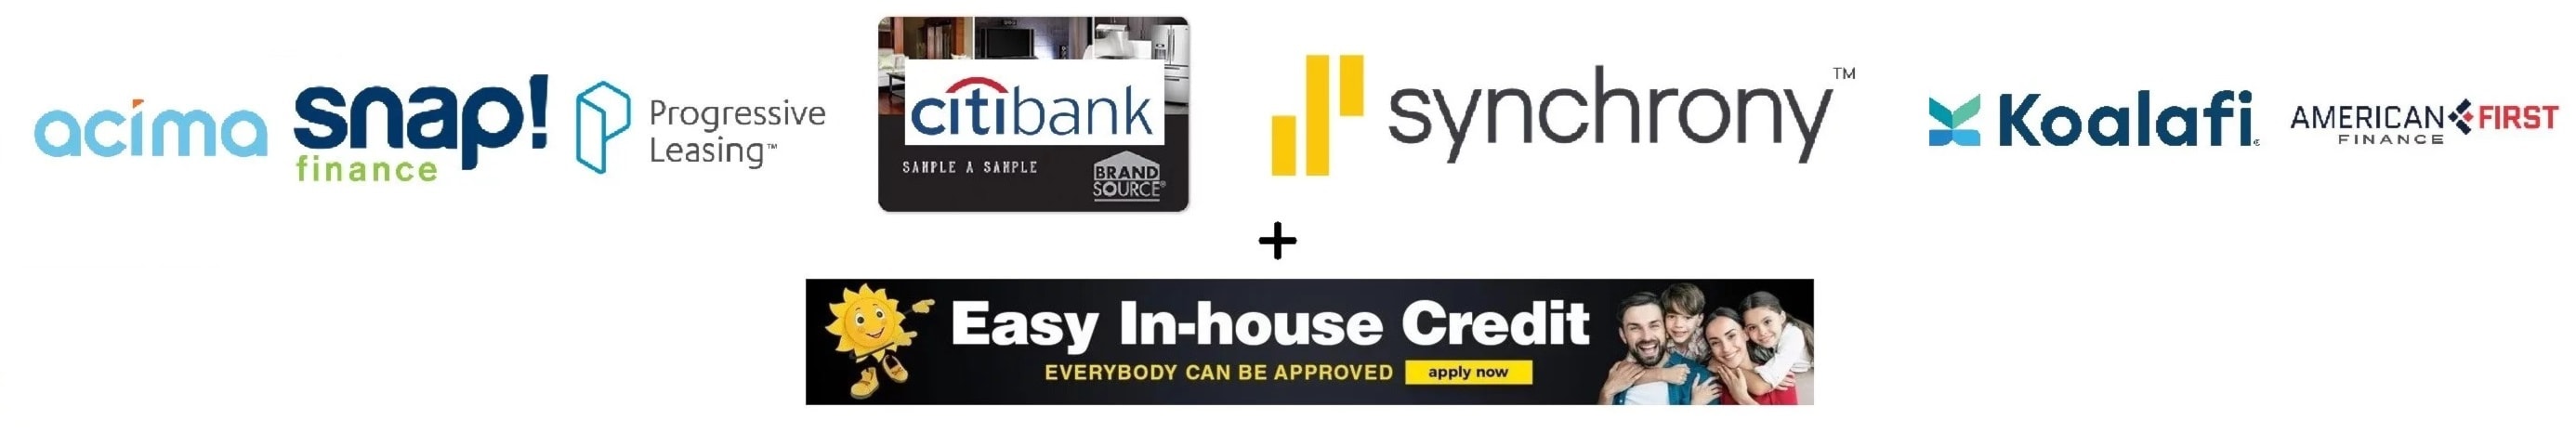 CitiBank Synchrony Genesis Acima Snap Progressive Leasing Koalafi American First Finance Easy Inhouse Credit